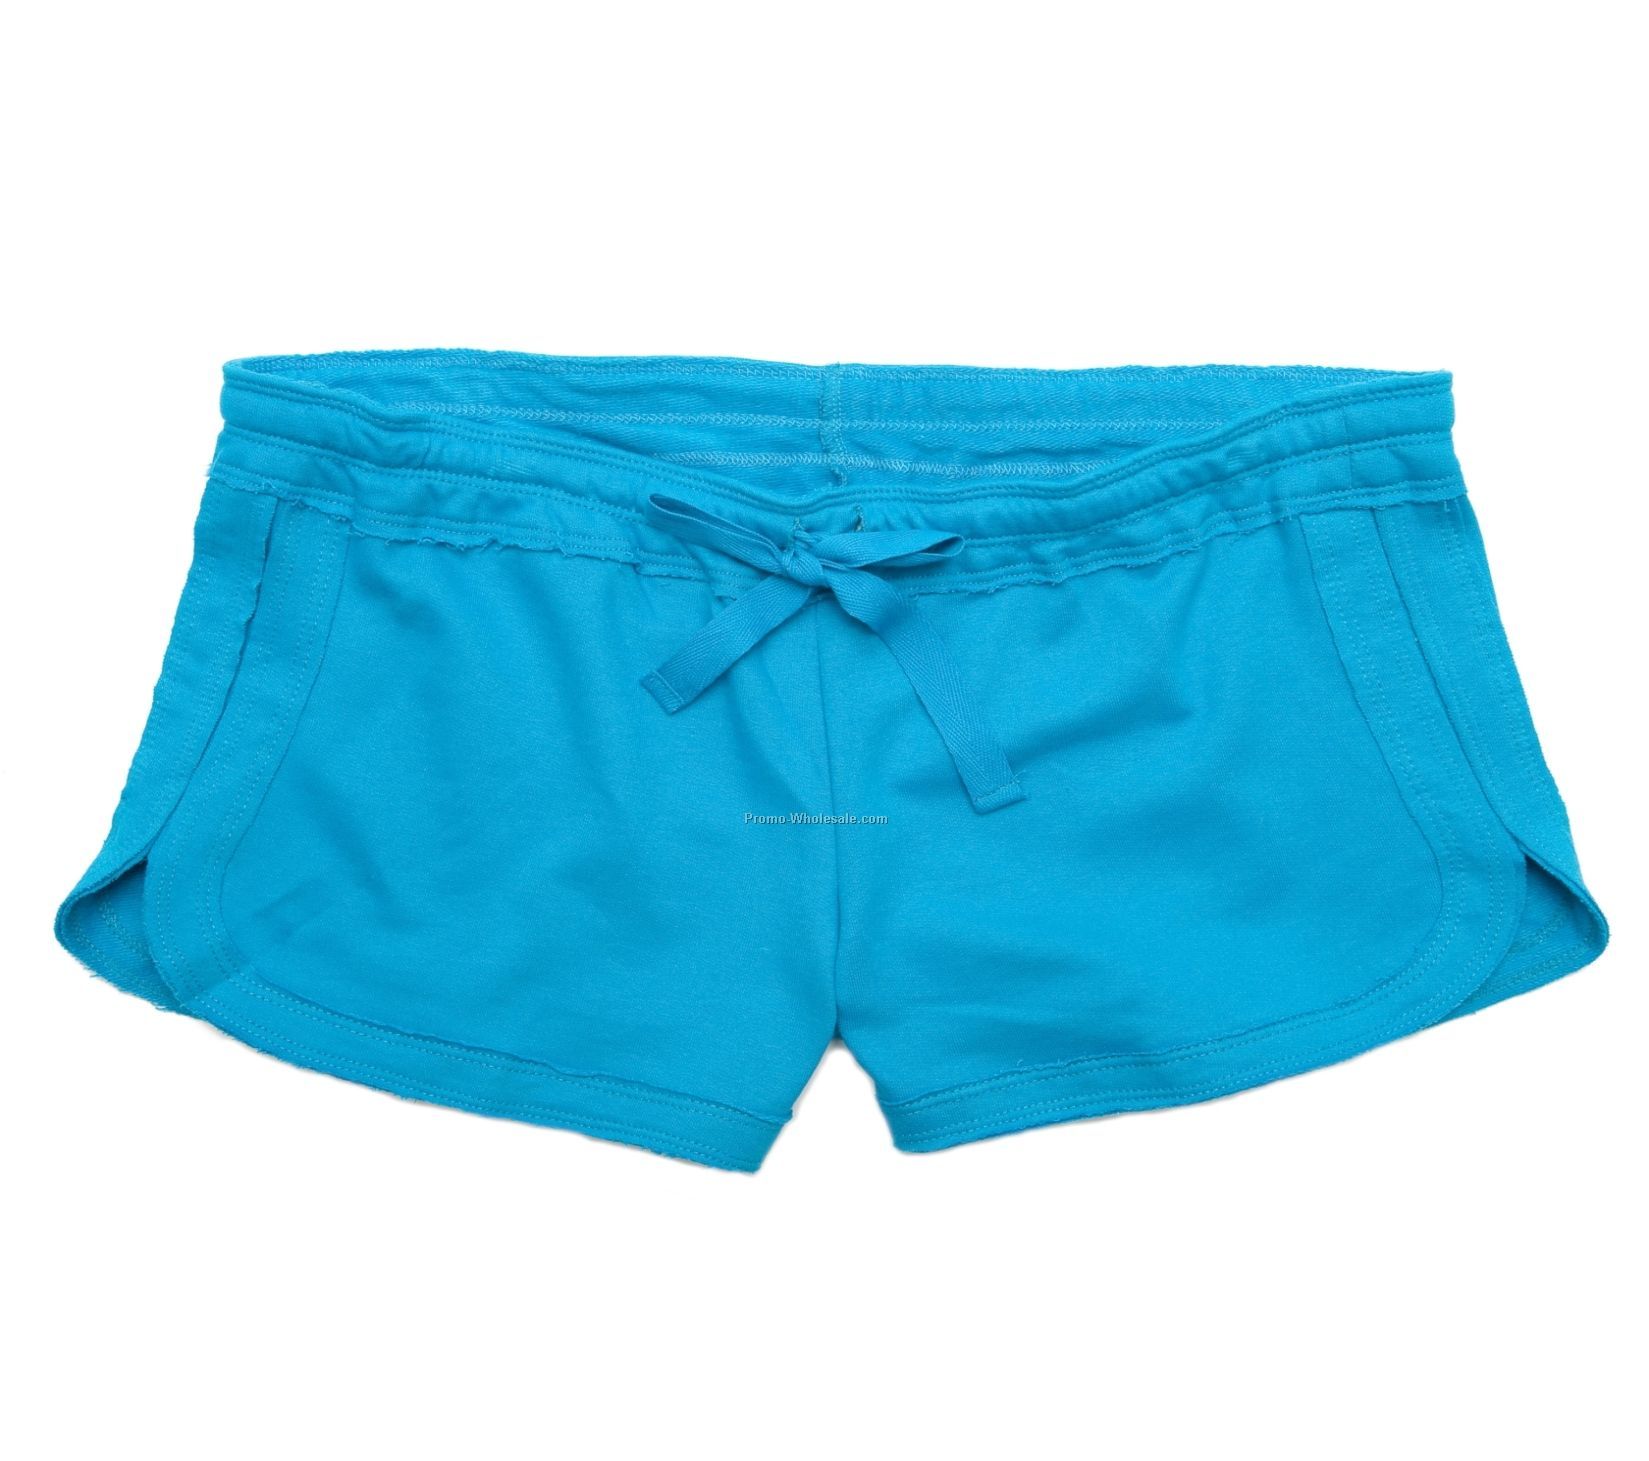 Adult Turquoise Chrissy Shorts (Xs-xl)